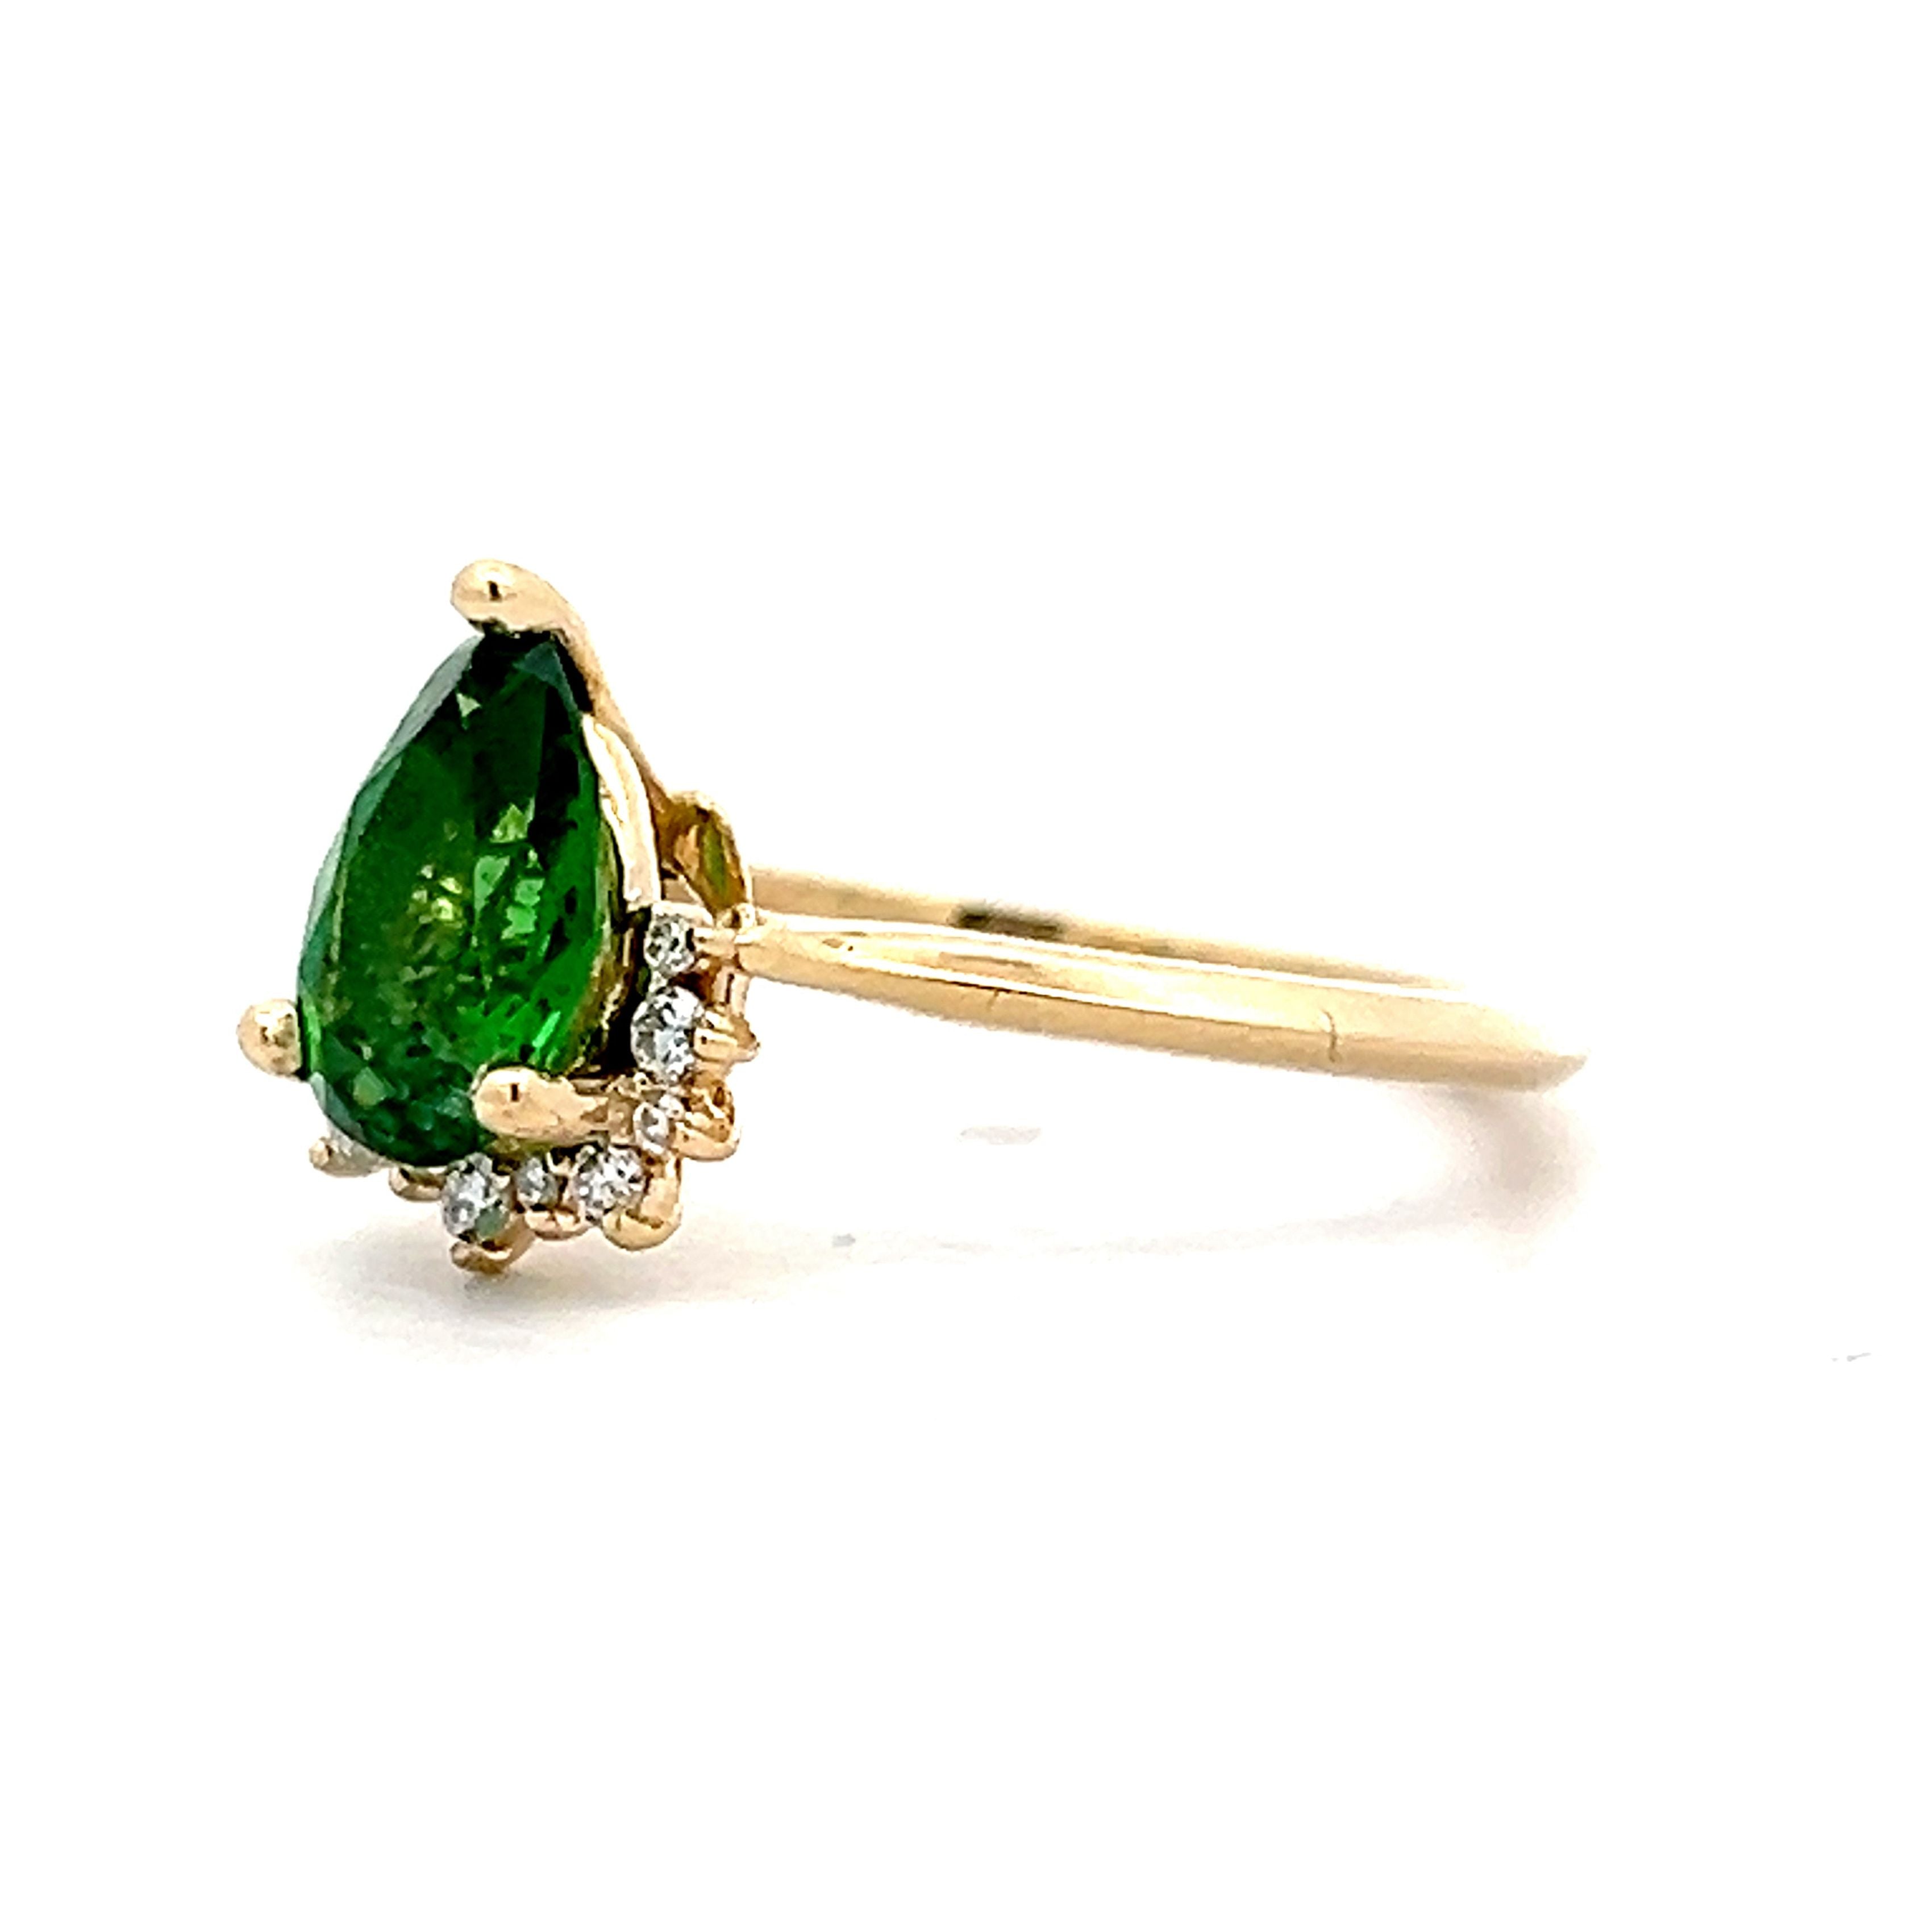 Emerald Cut Tsavorite Garnet And Diamond Bypass Ring In 14Kt White Gold